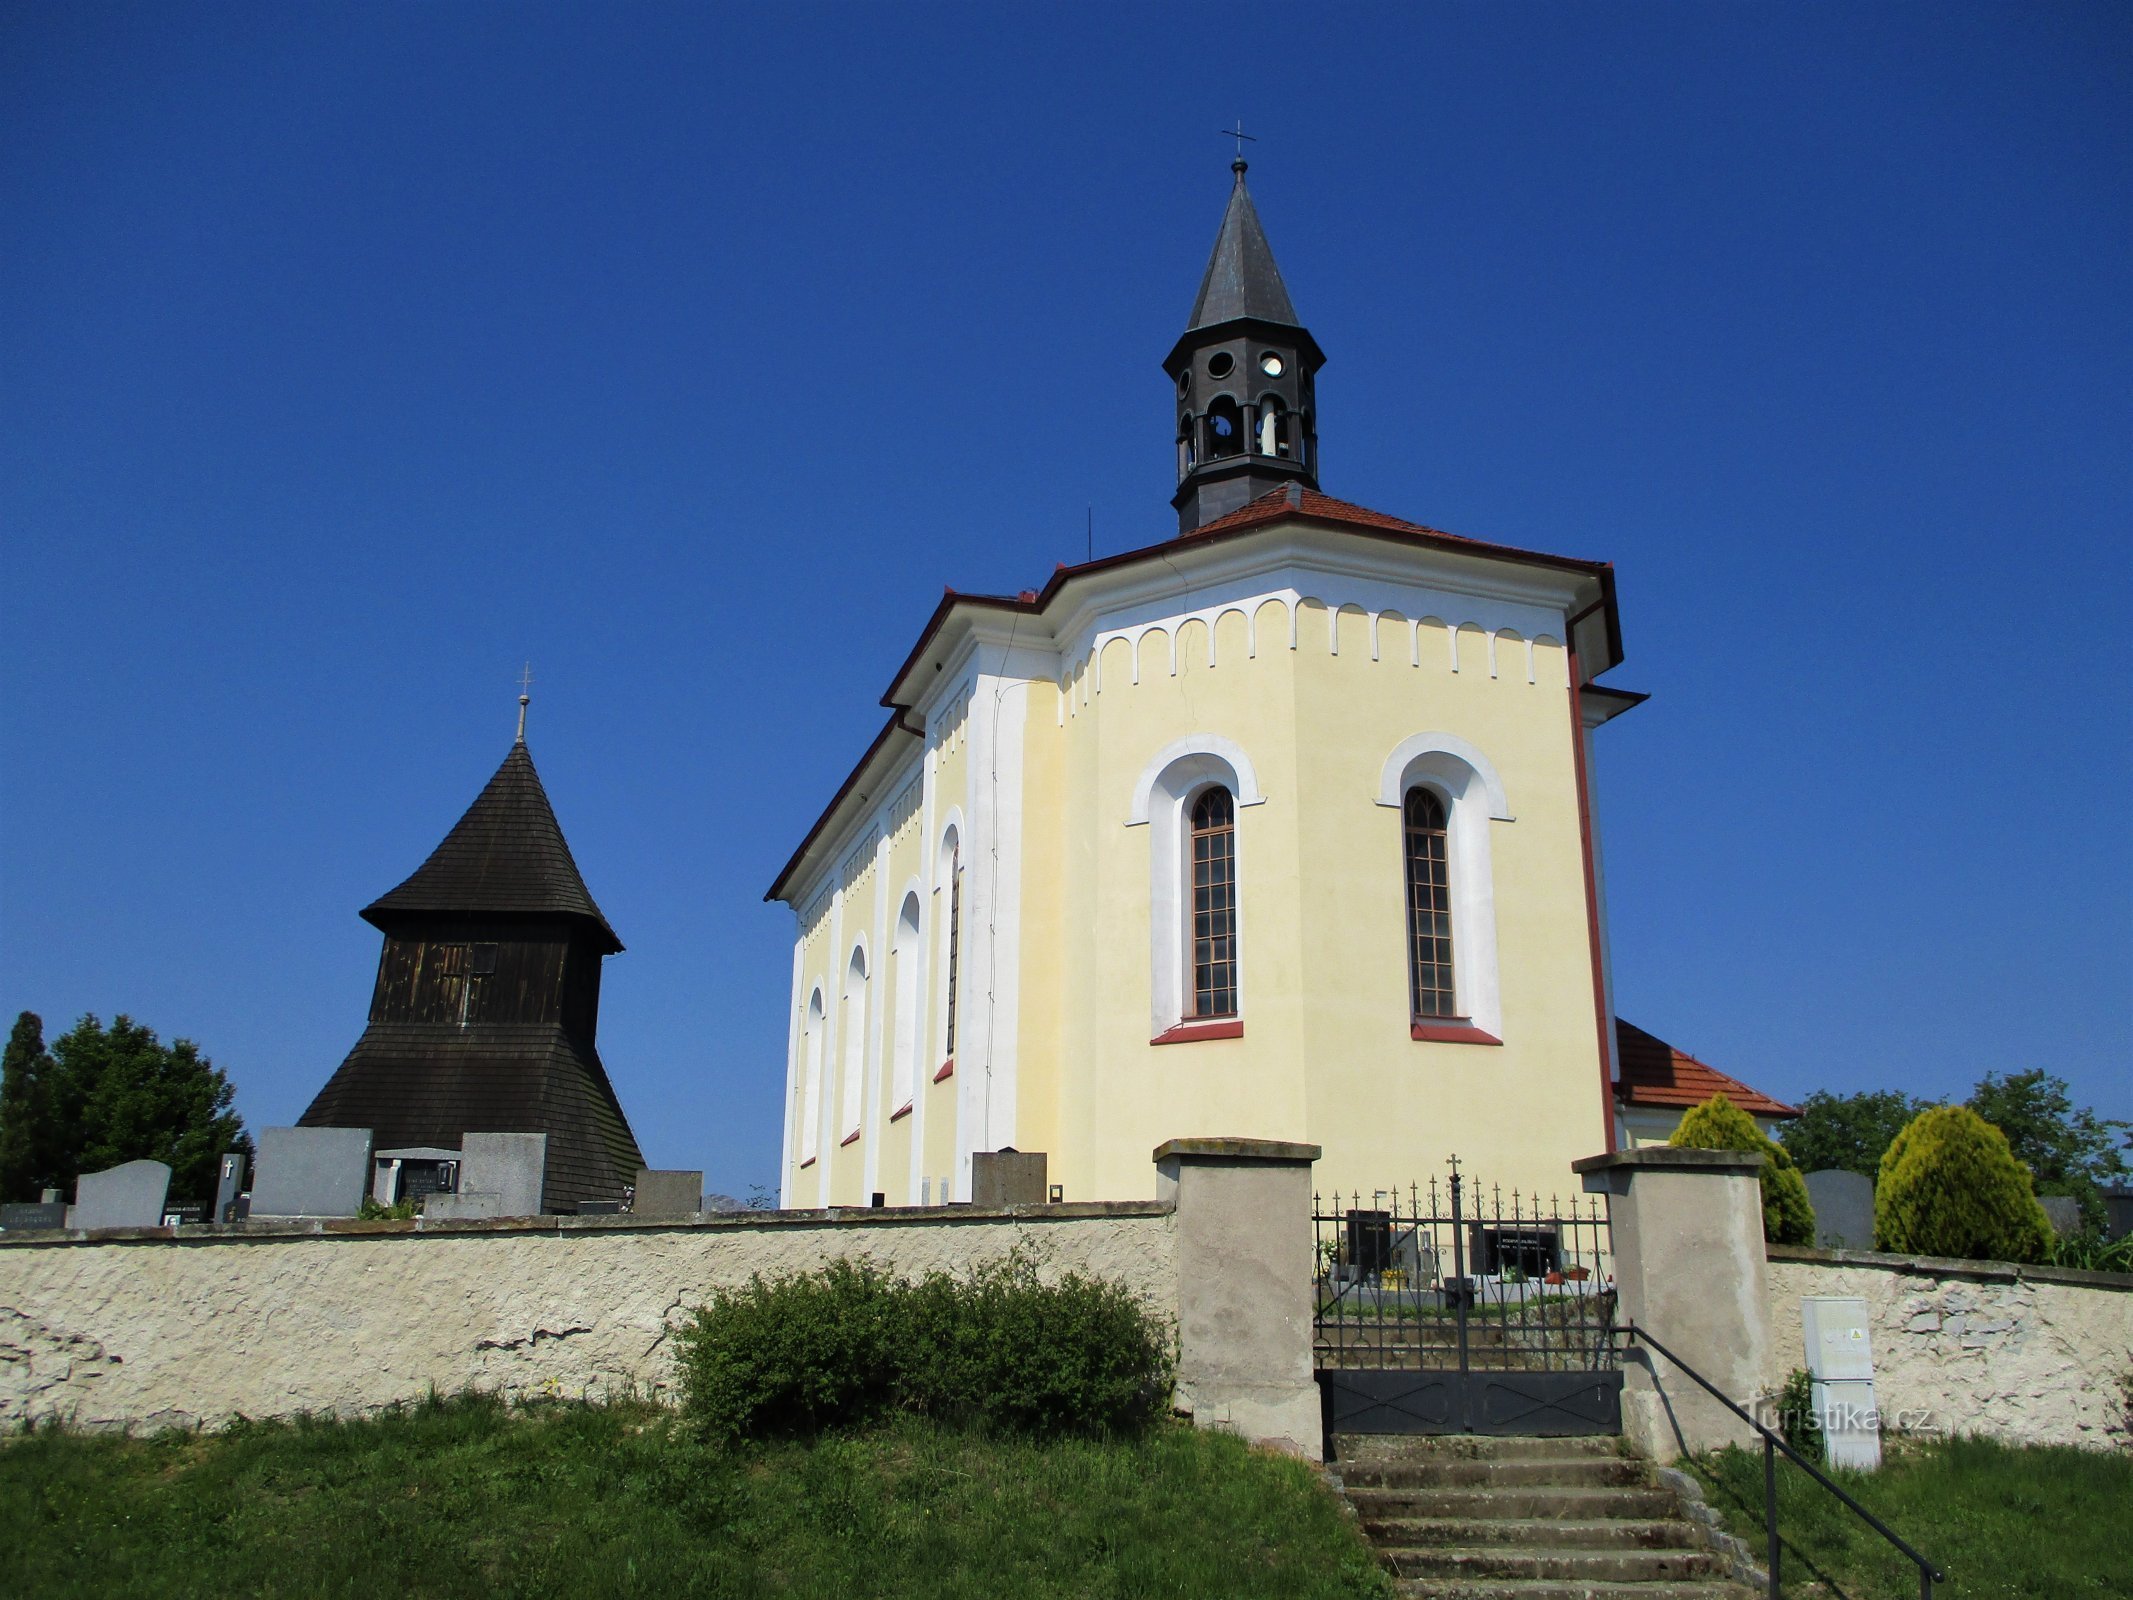 Église de St. Venceslas avec le clocher (Horní Ředice, 16.5.2020/XNUMX/XNUMX)